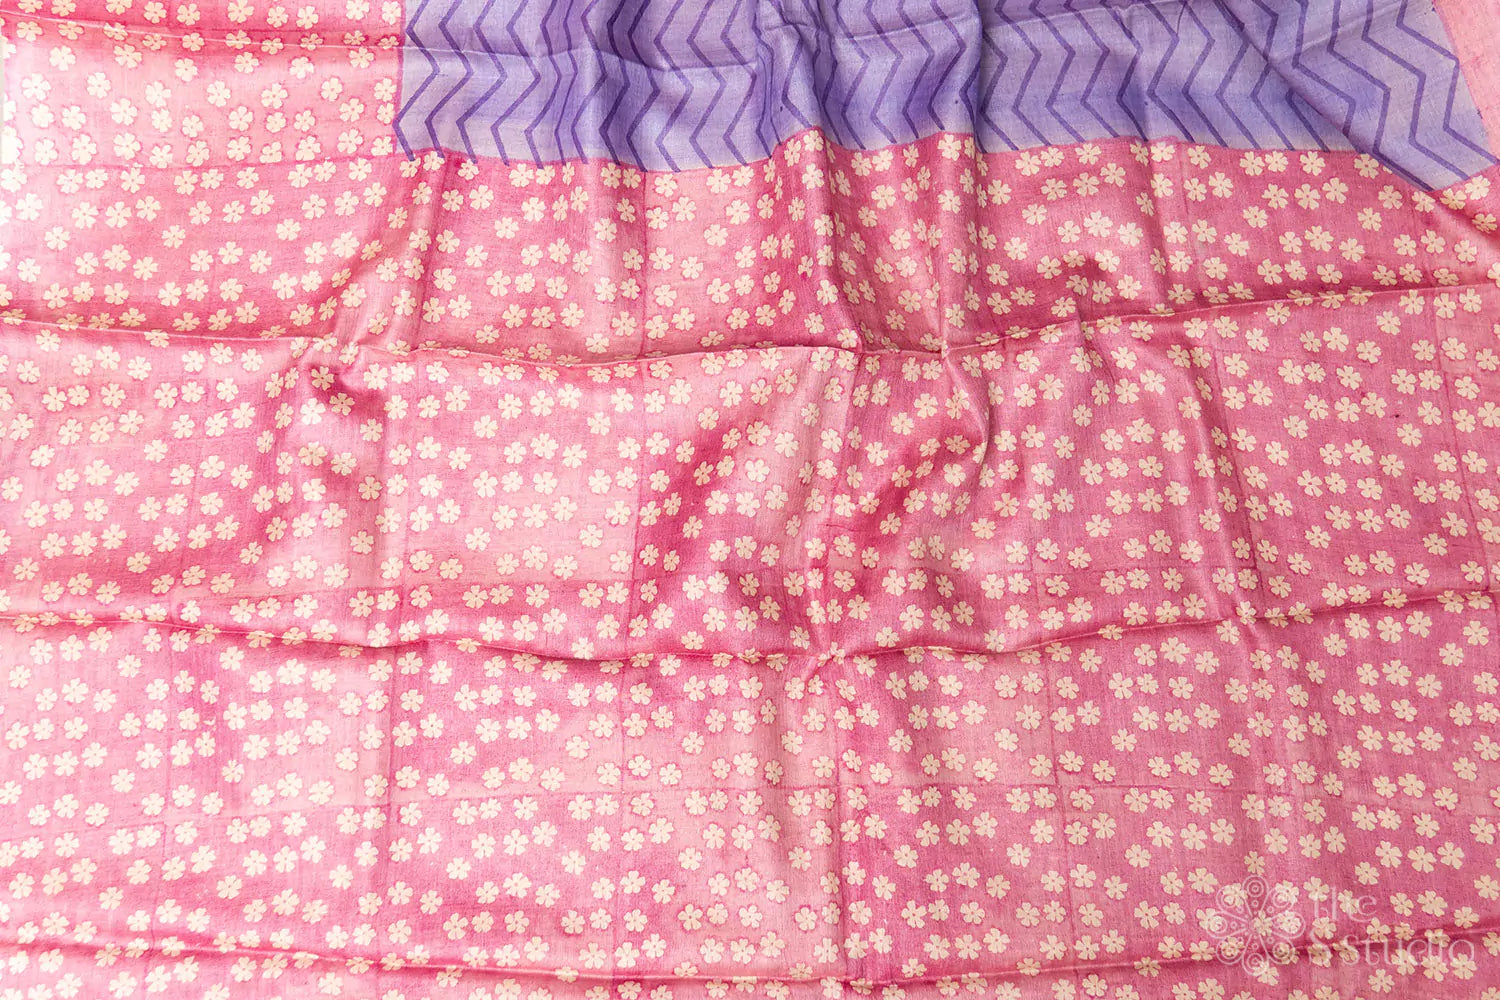 Lavendar tussar silk saree with pink floral printed border